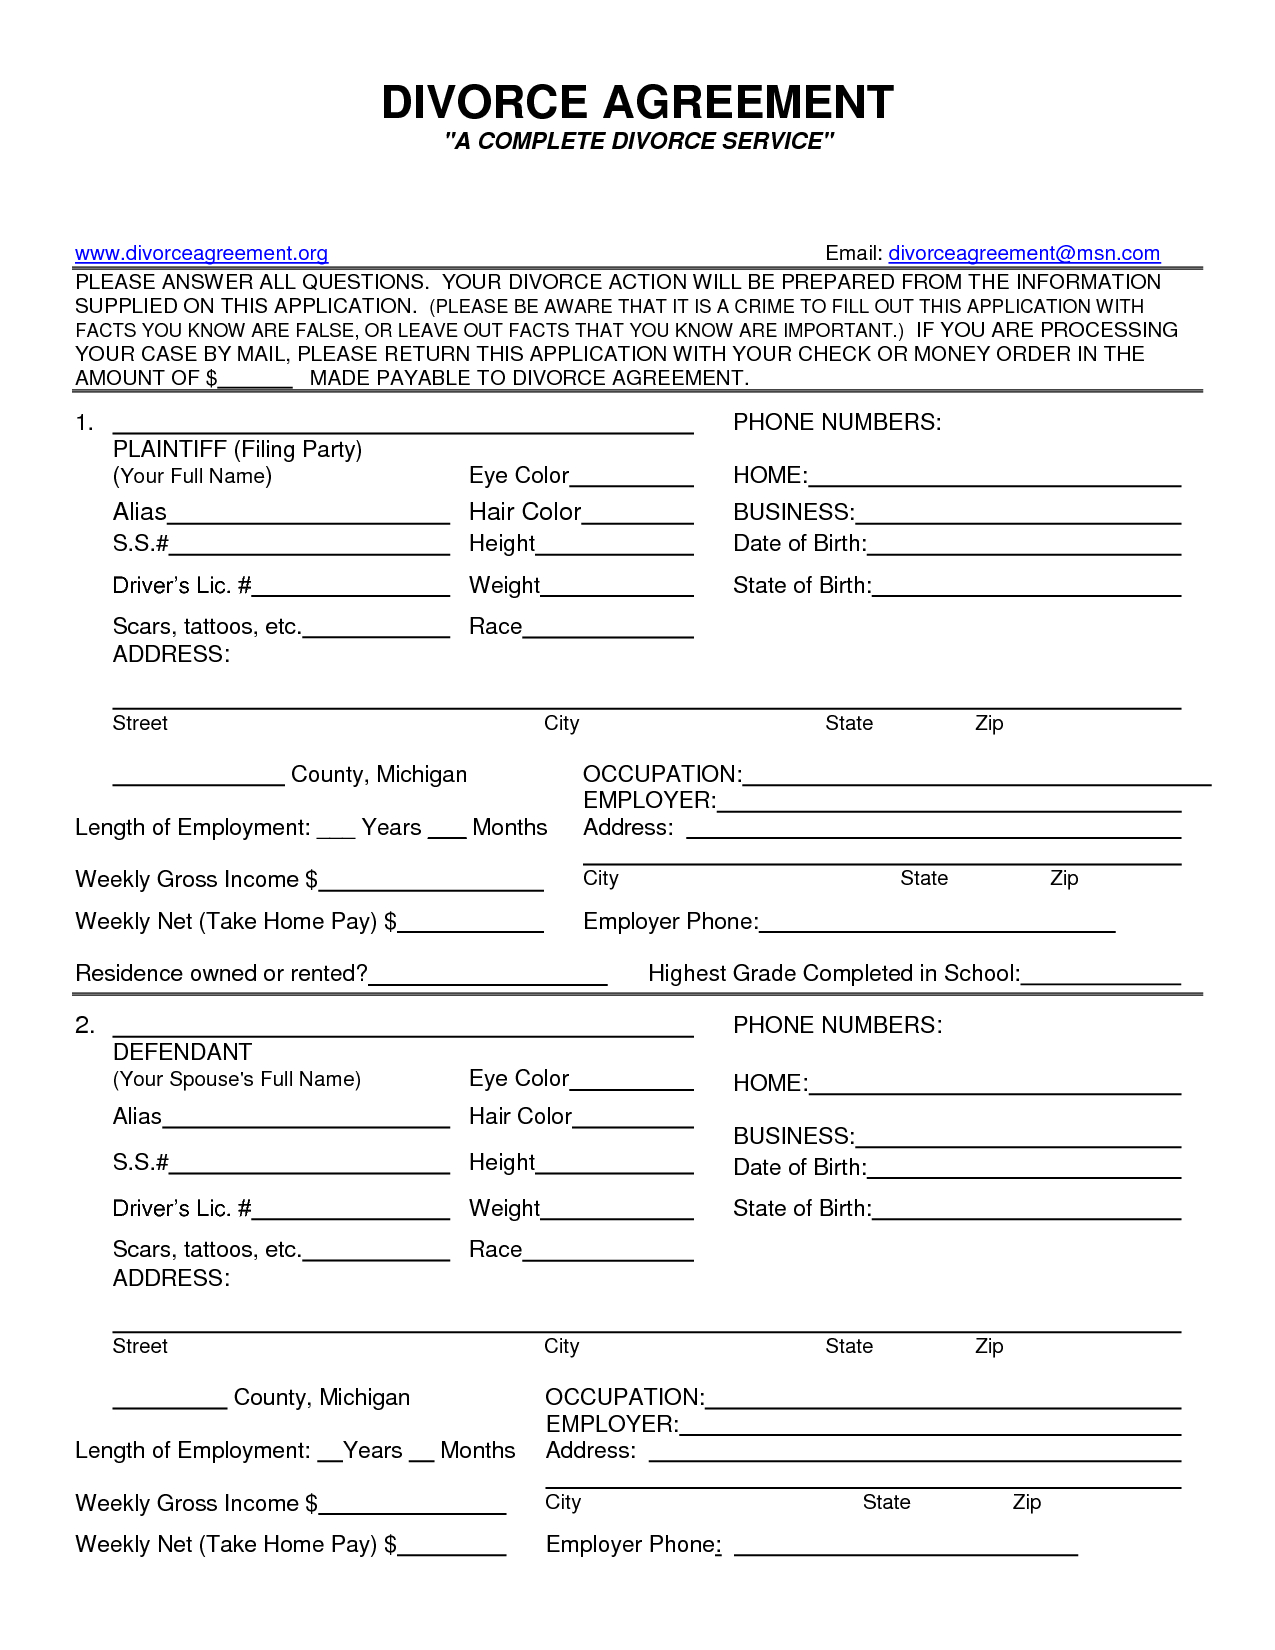 Fake Divorce Papers Pdf | Worksheet To Print | Fake Divorce Papers - Free Printable Divorce Papers For Illinois